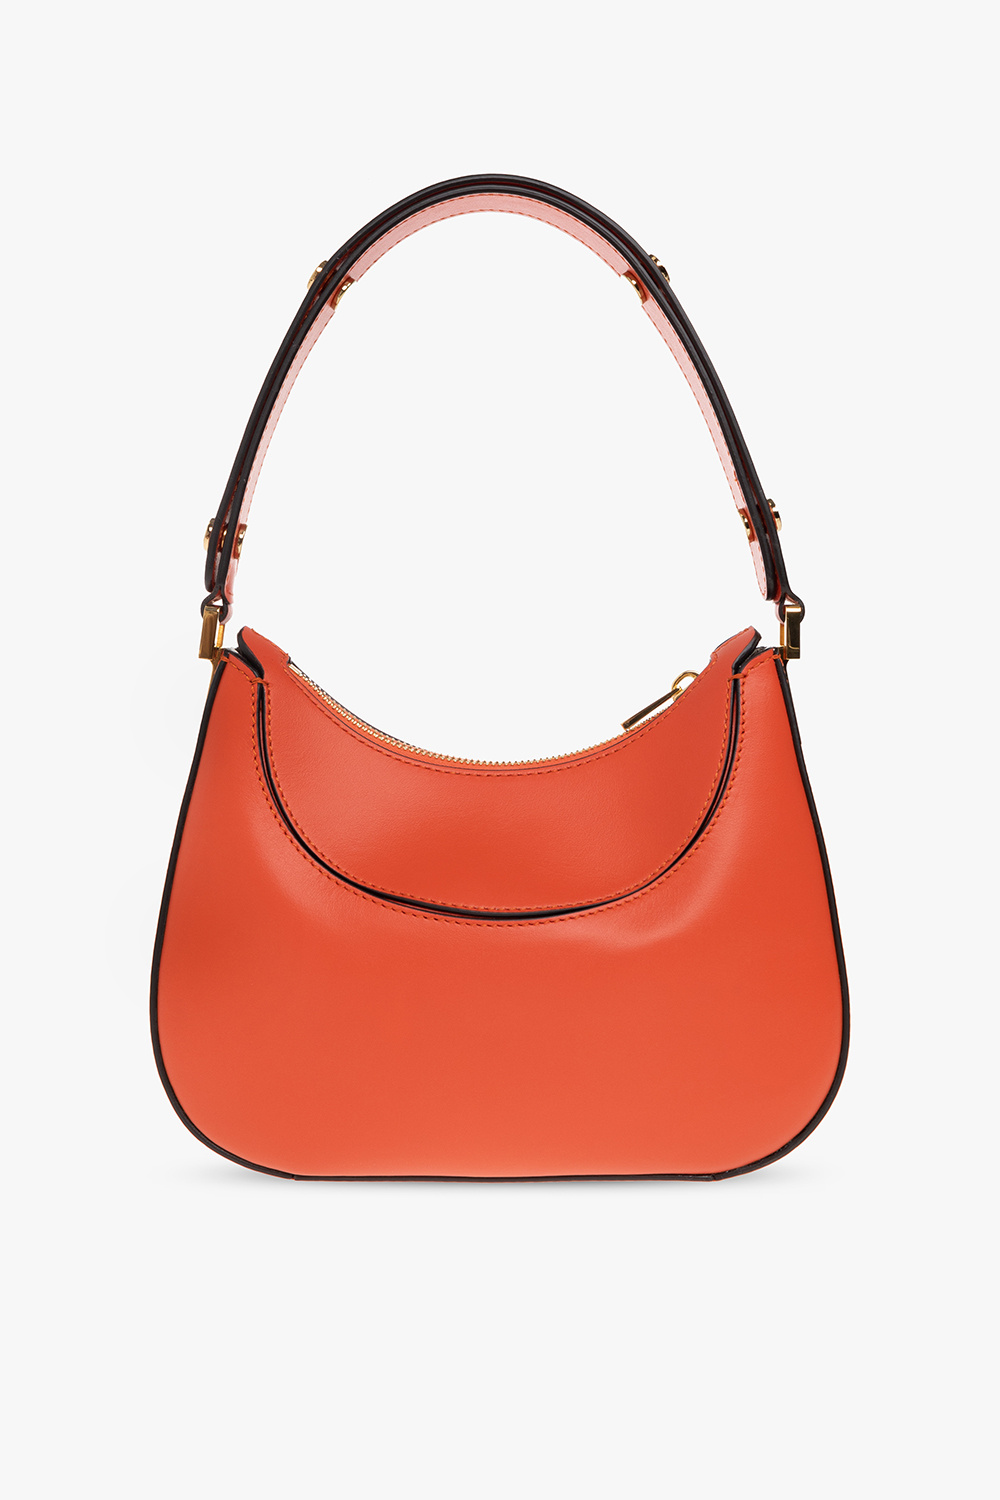 Marni ‘Milano Mini’ shoulder bag